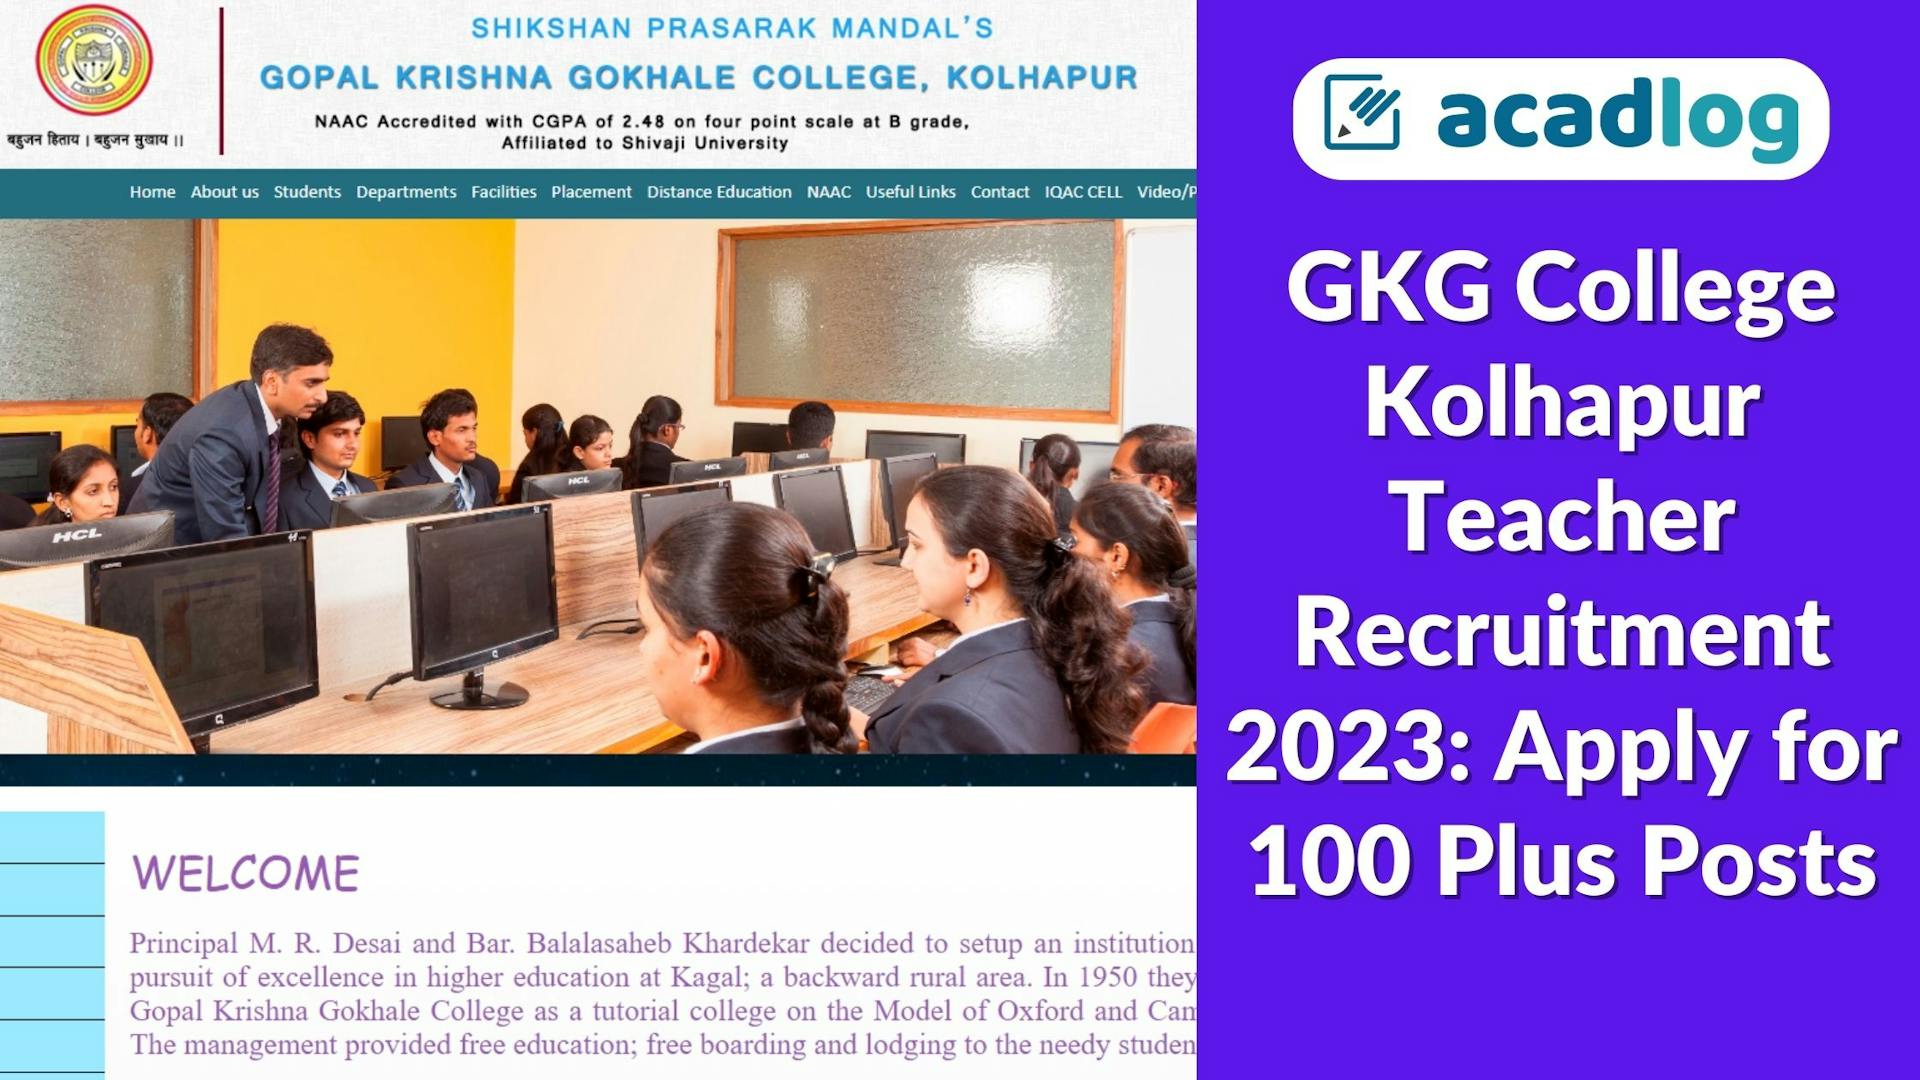 GKG College Kolhapur Teacher Recruitment 2023: Apply for 100 Plus Posts